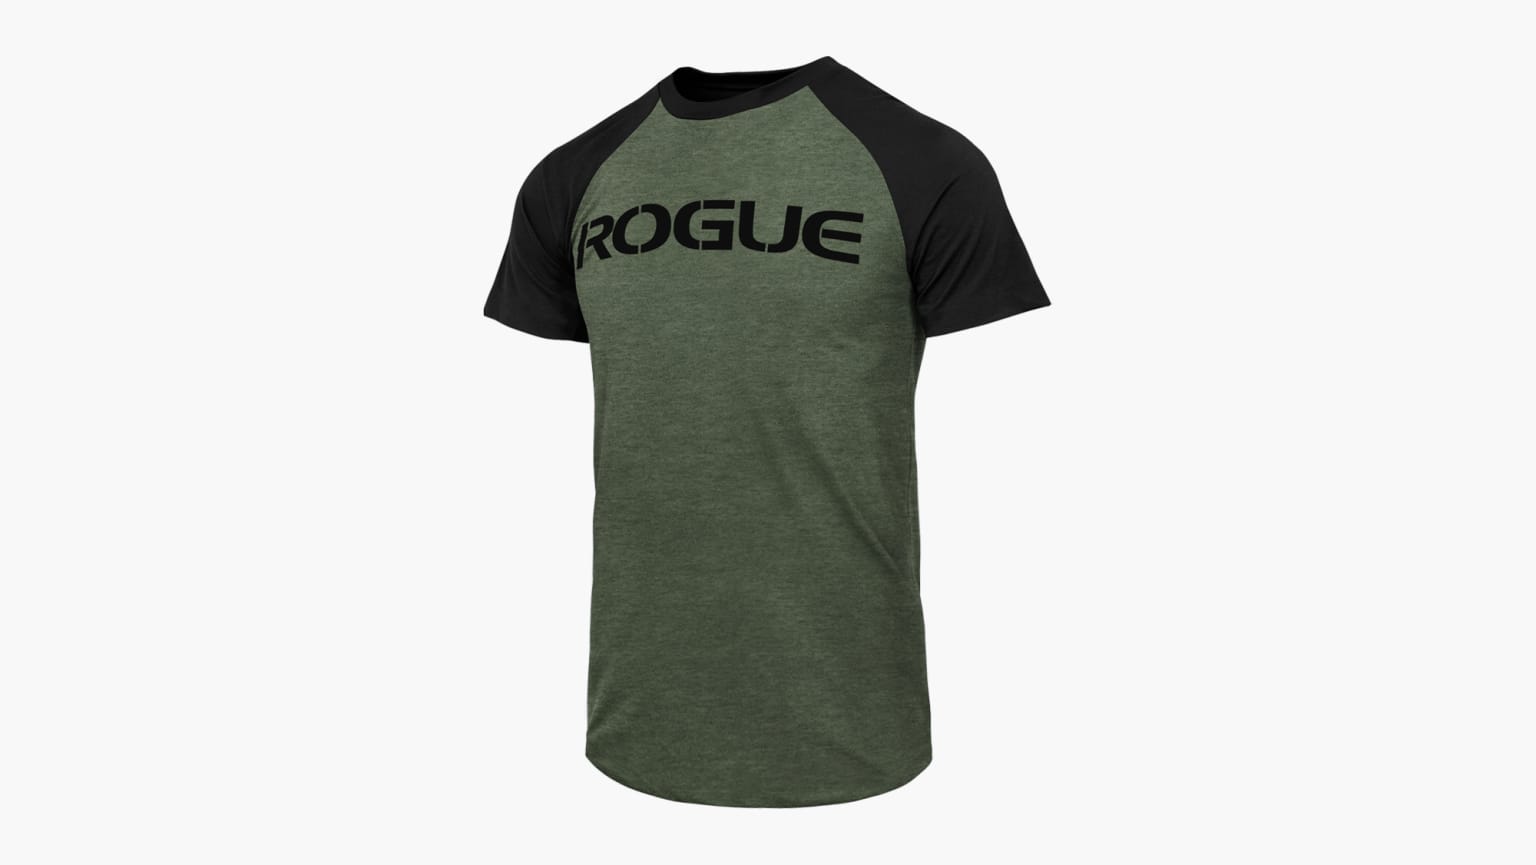 Rogue Raglan Shirt - Heather Lieutenant / Black